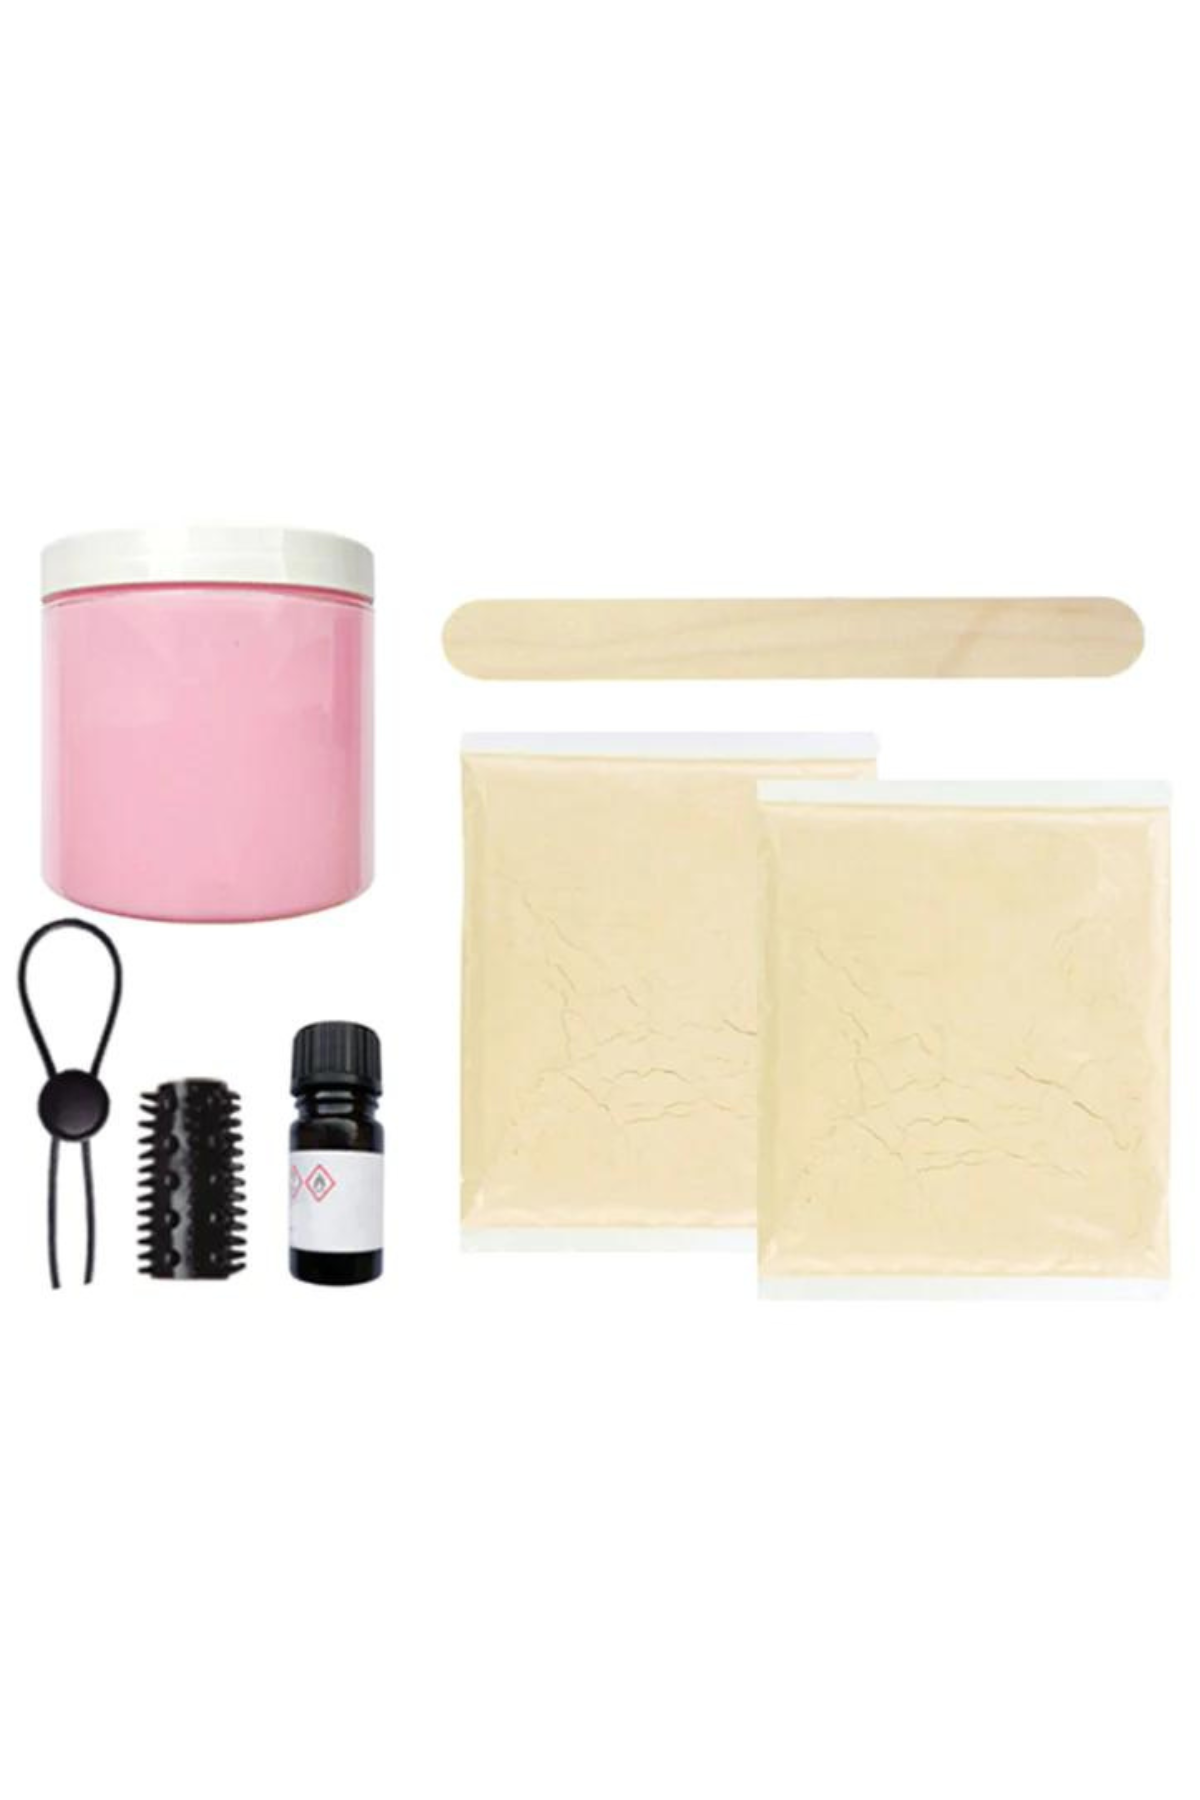 Cloneboy Tulip | Hot Pink Dildo Kit